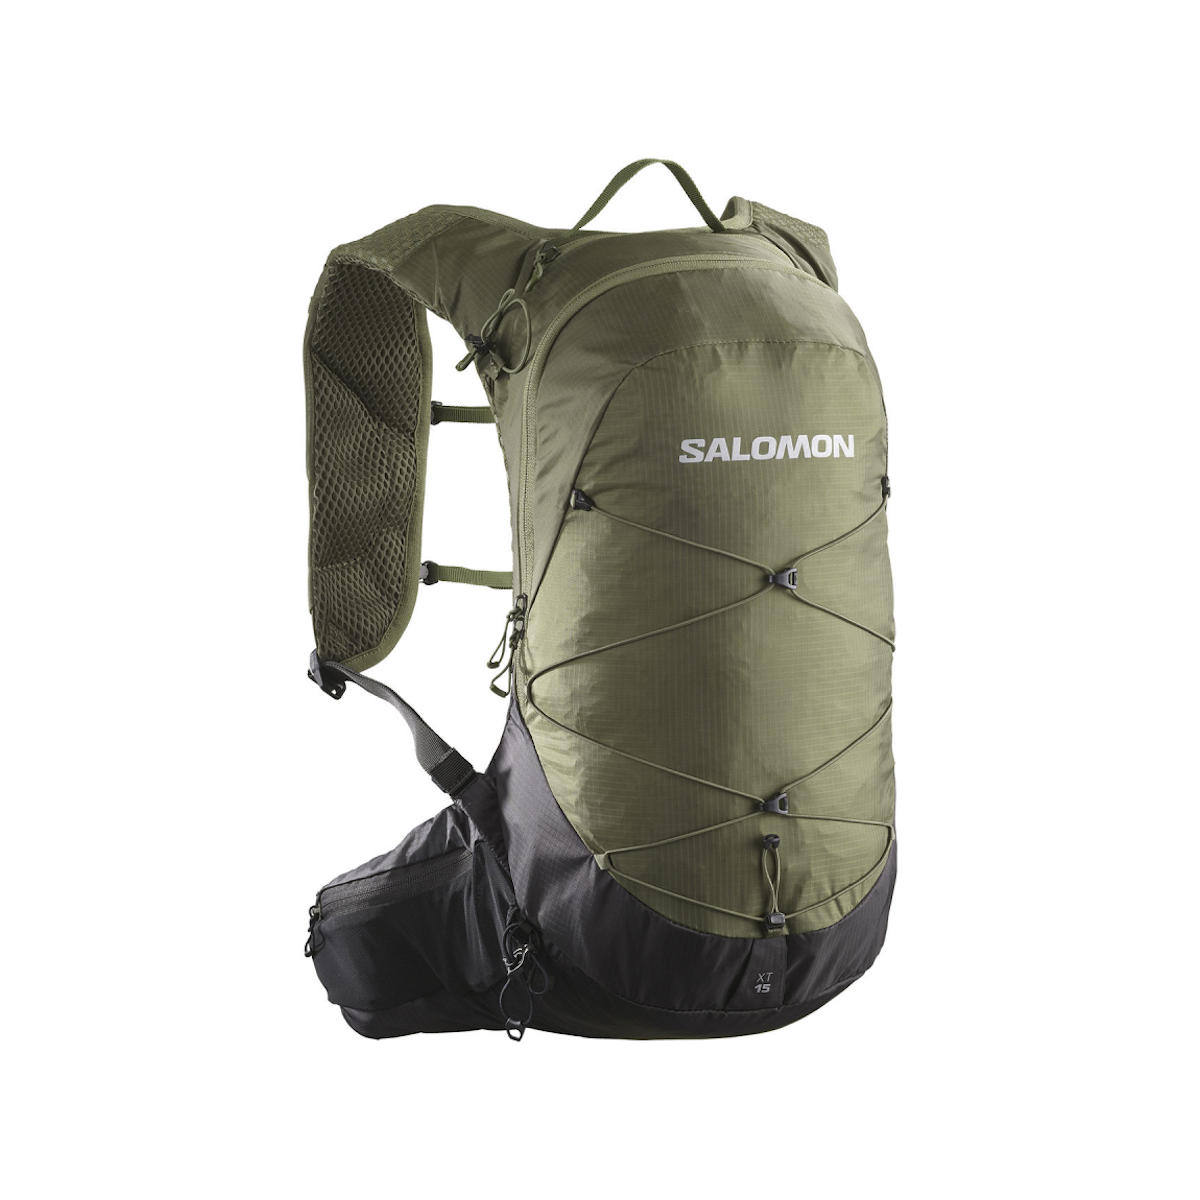 SALOMON XT 15 backpack - green/black